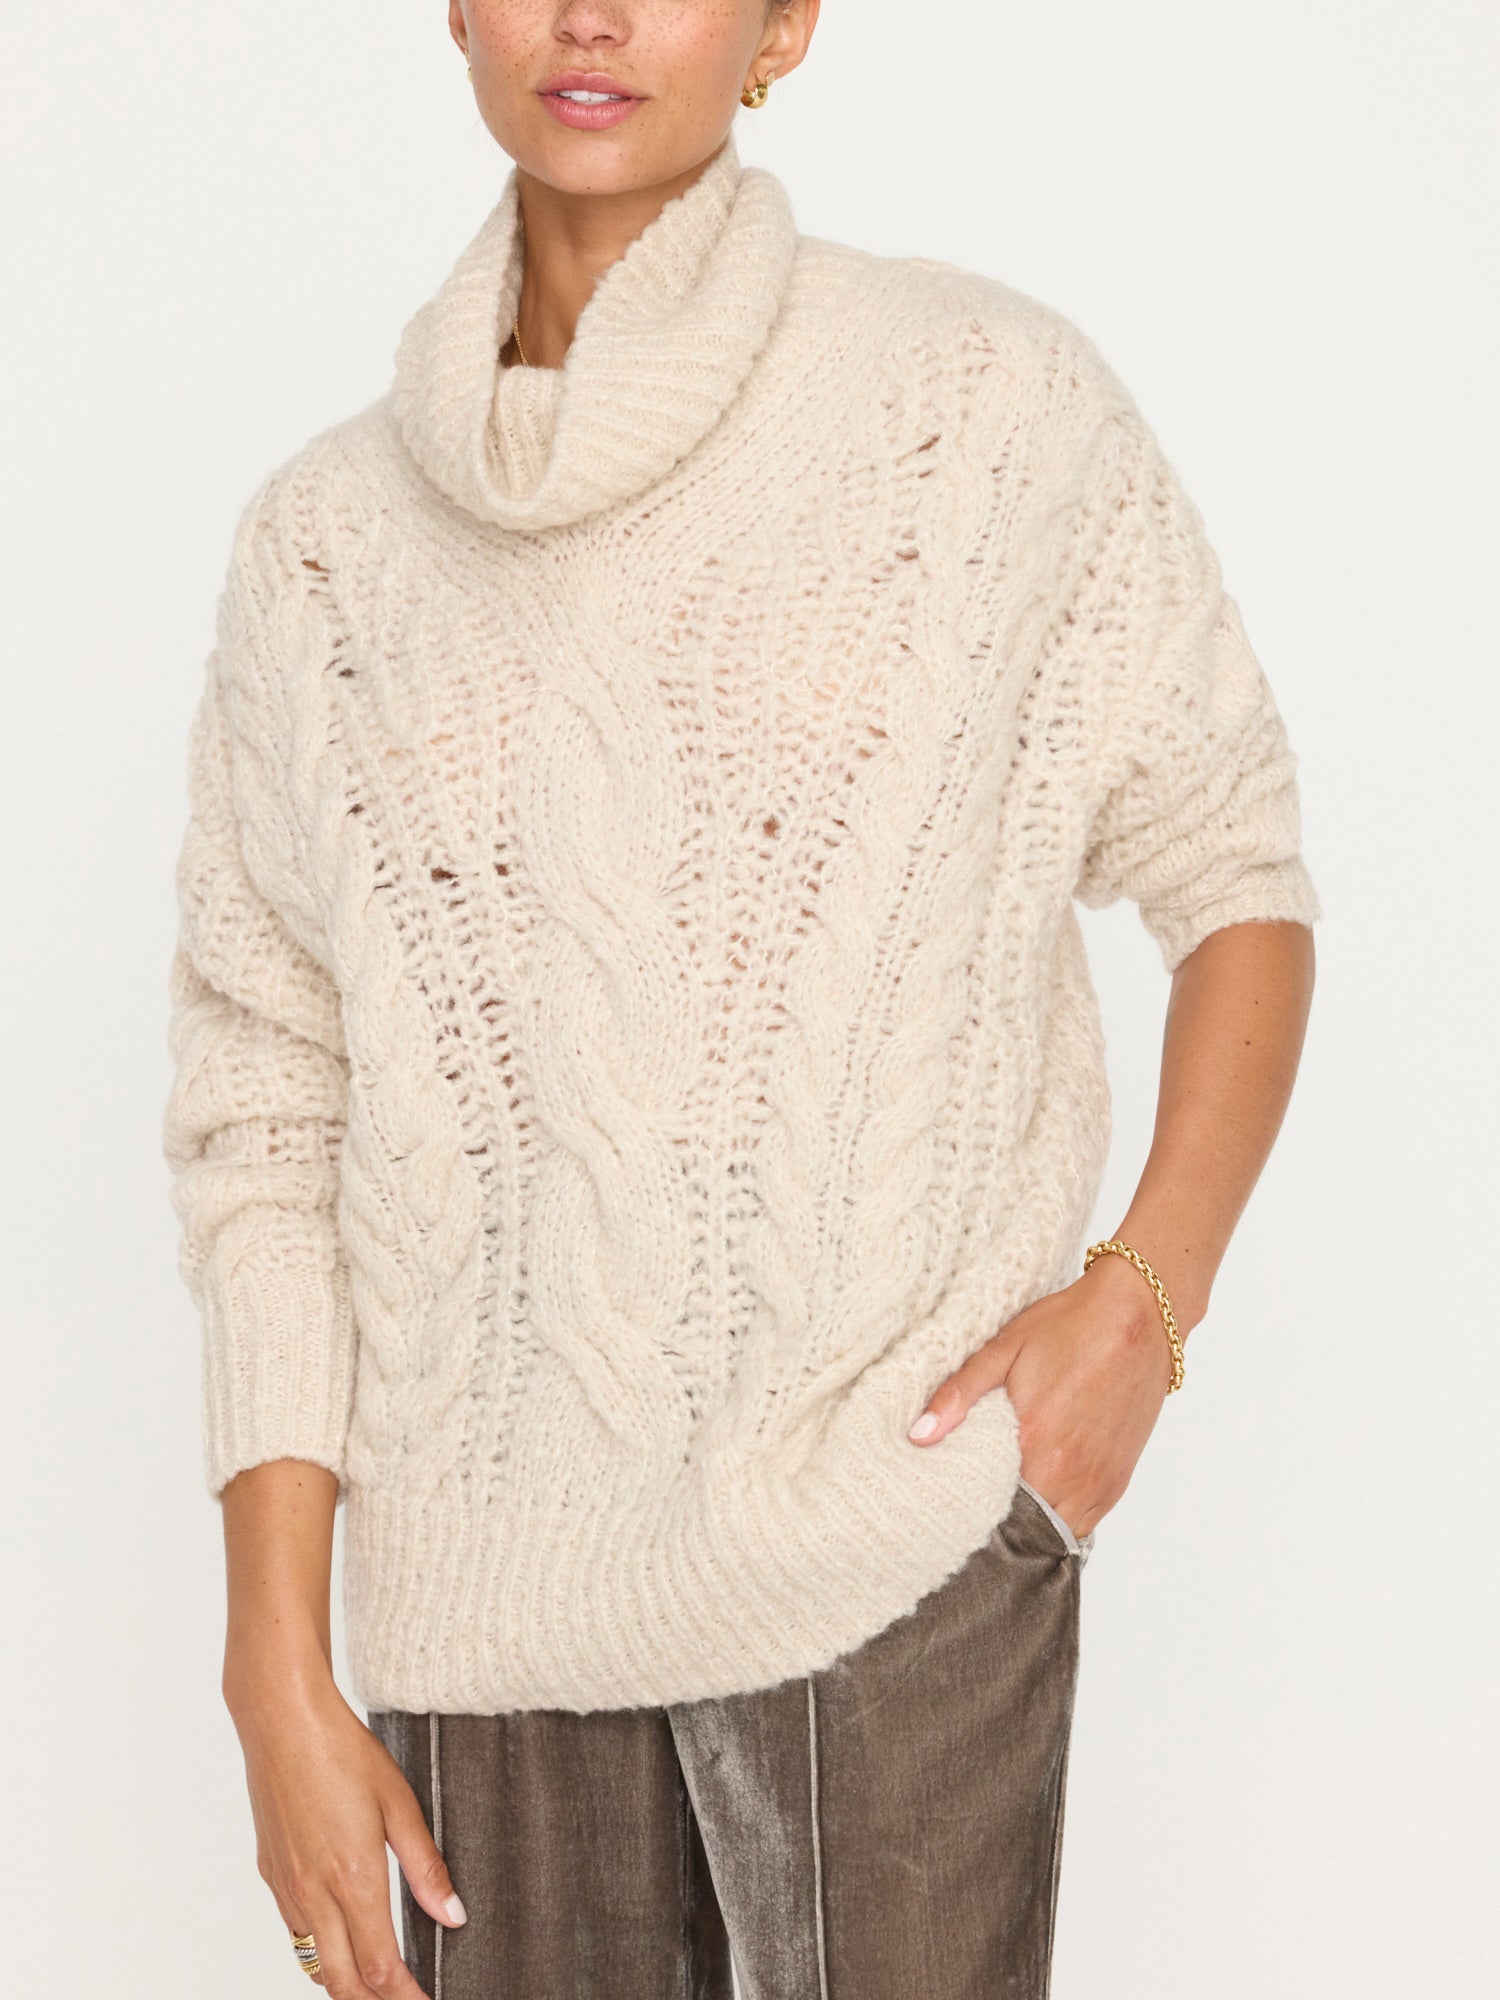 Elden cable knit beige turtleneck sweater front view